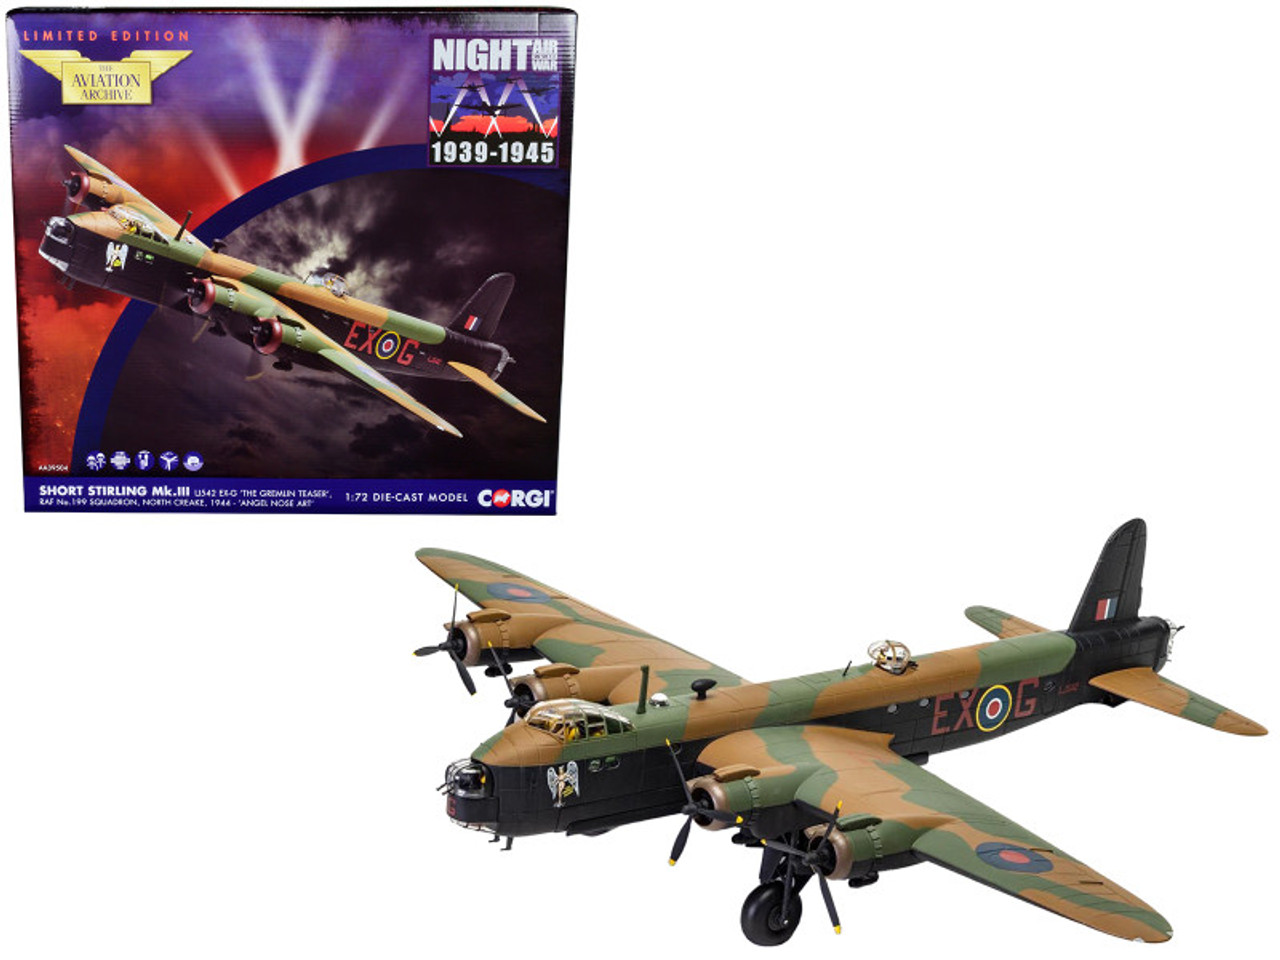 Short Stirling Bomber Aircraft 